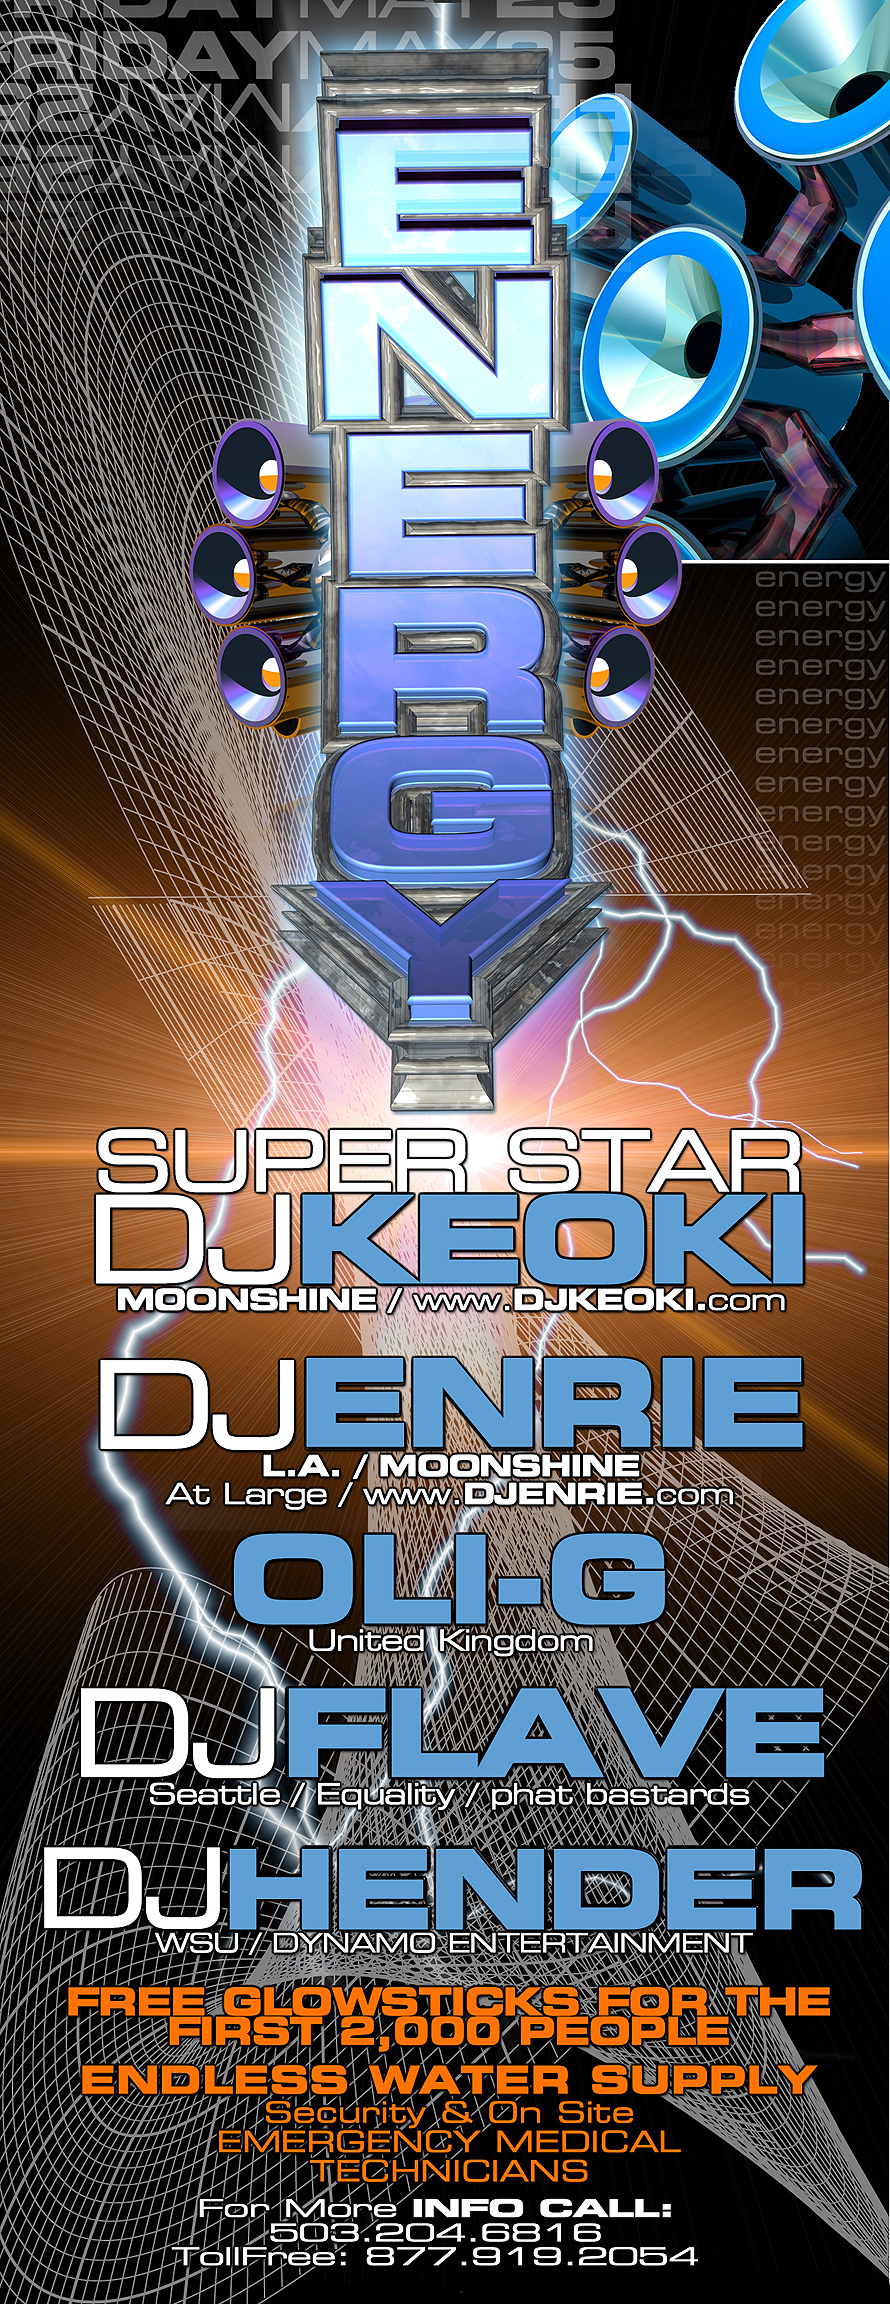 Energy with Super Star DJ Keoki